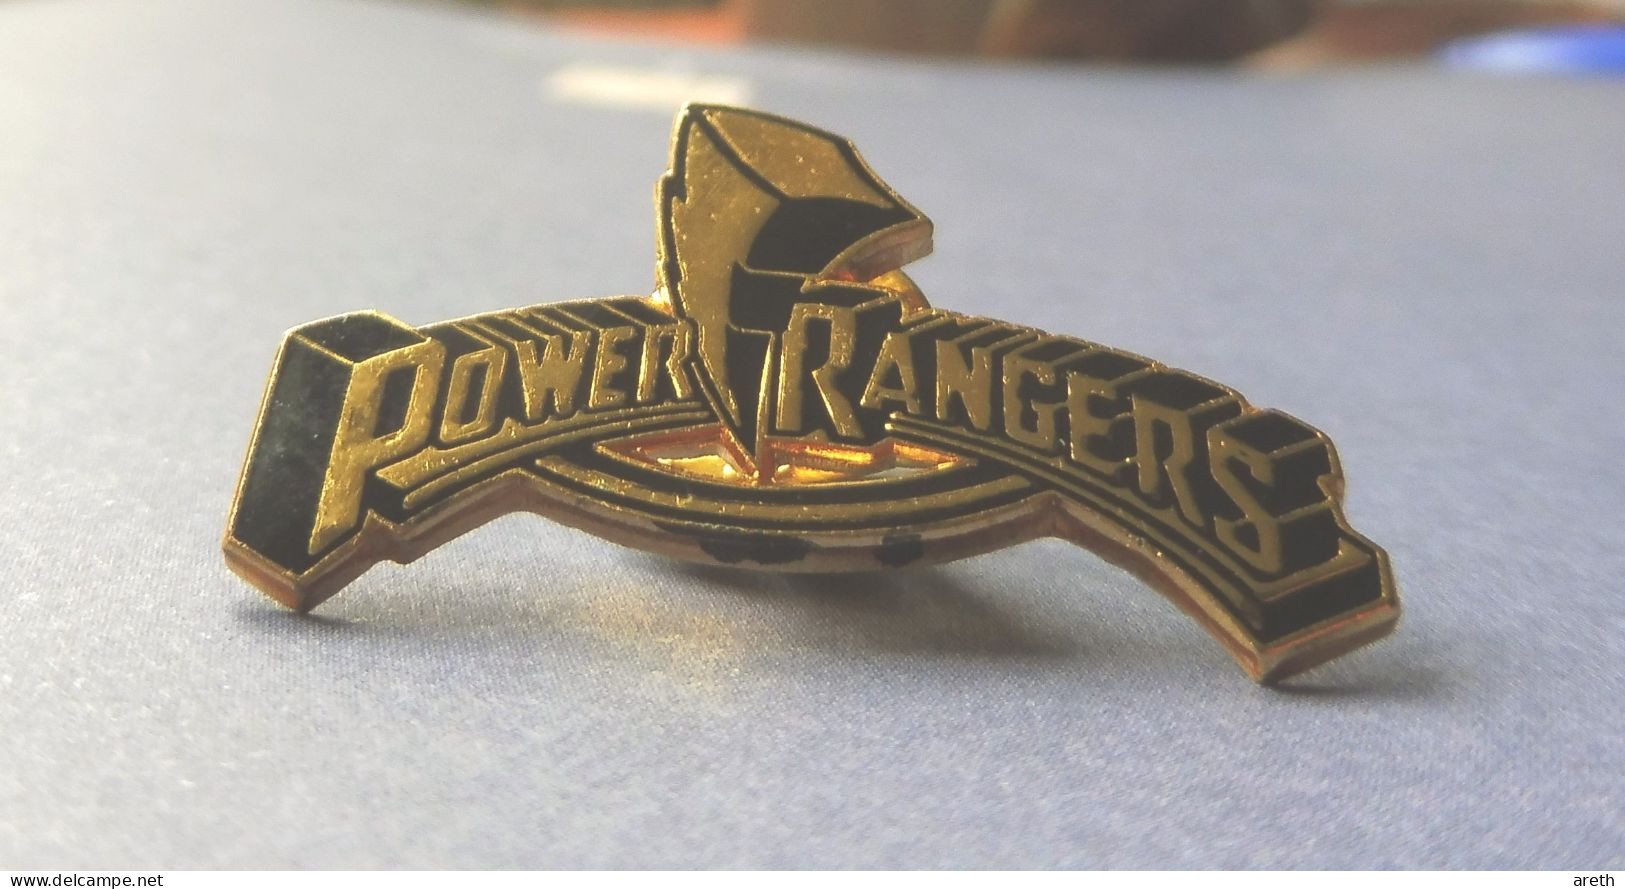 Pin's Power Rangers - Comics